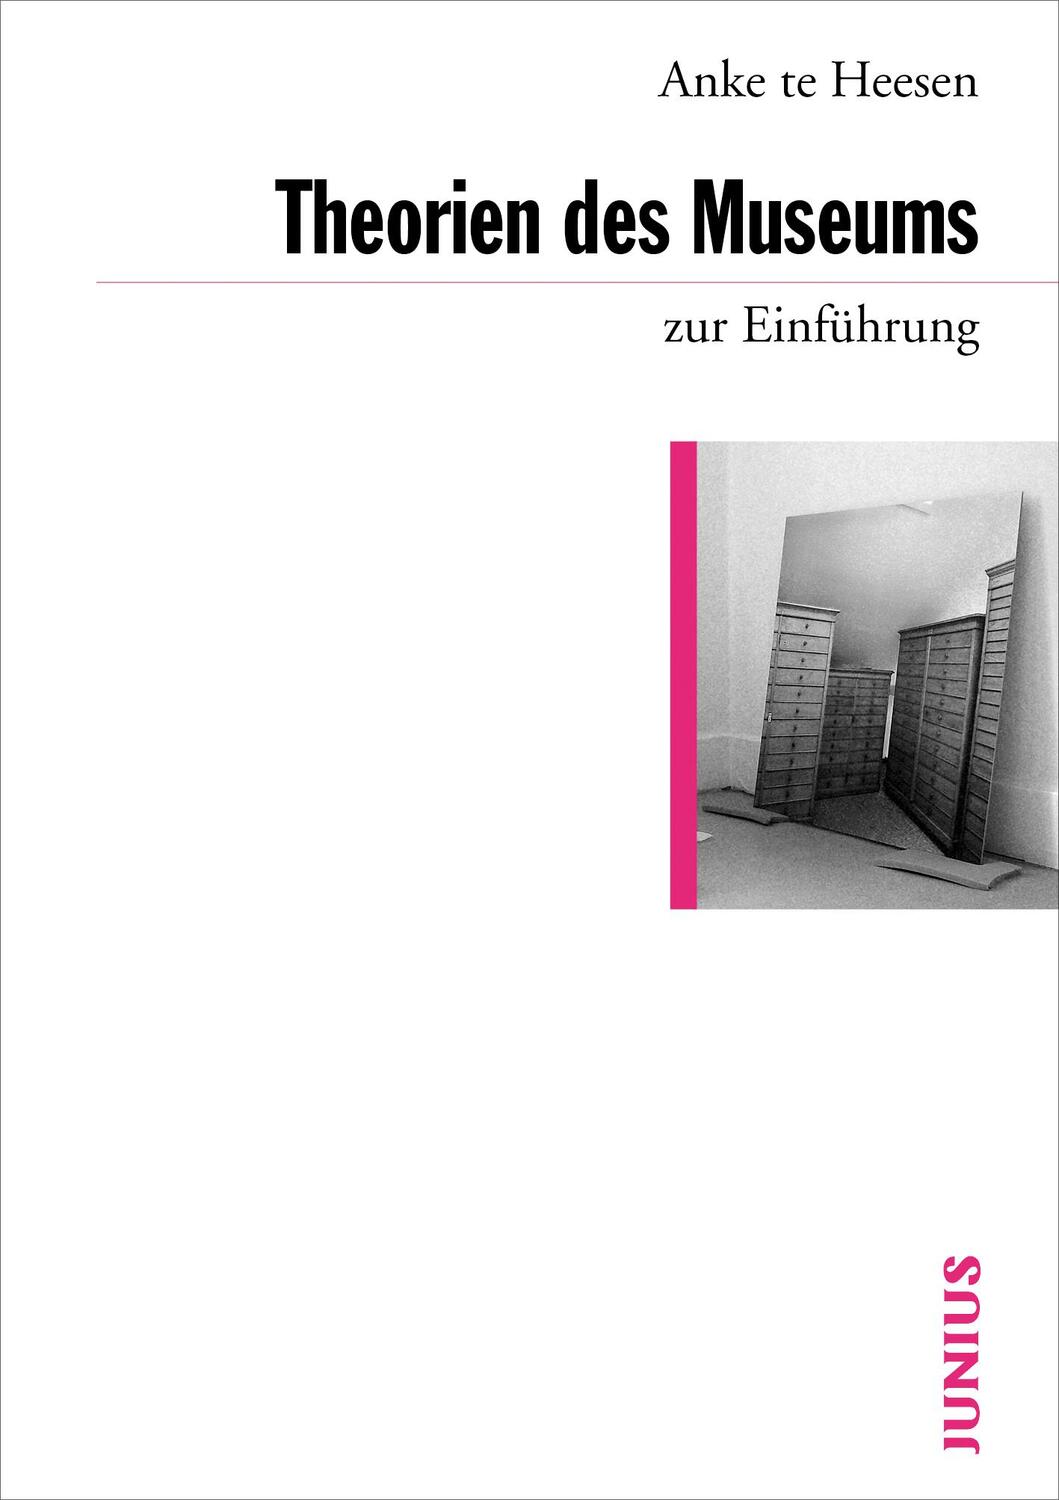 Theorien des Museums zur Einführung - Heesen, Anke te